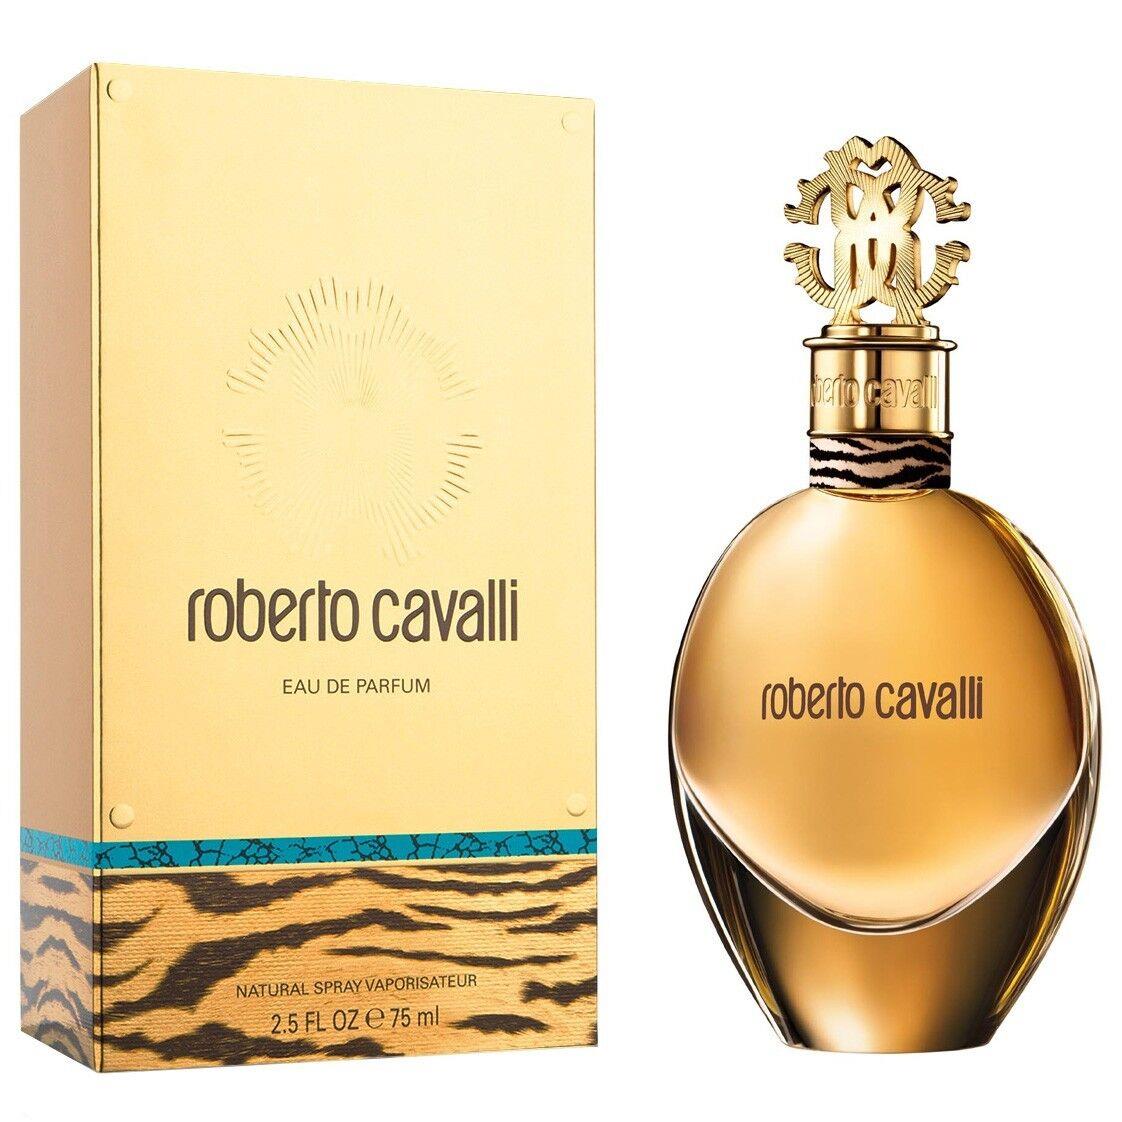 Roberto Cavalli by Roberto Cavalli For Women 2.5 oz Eau de Parfum Spray